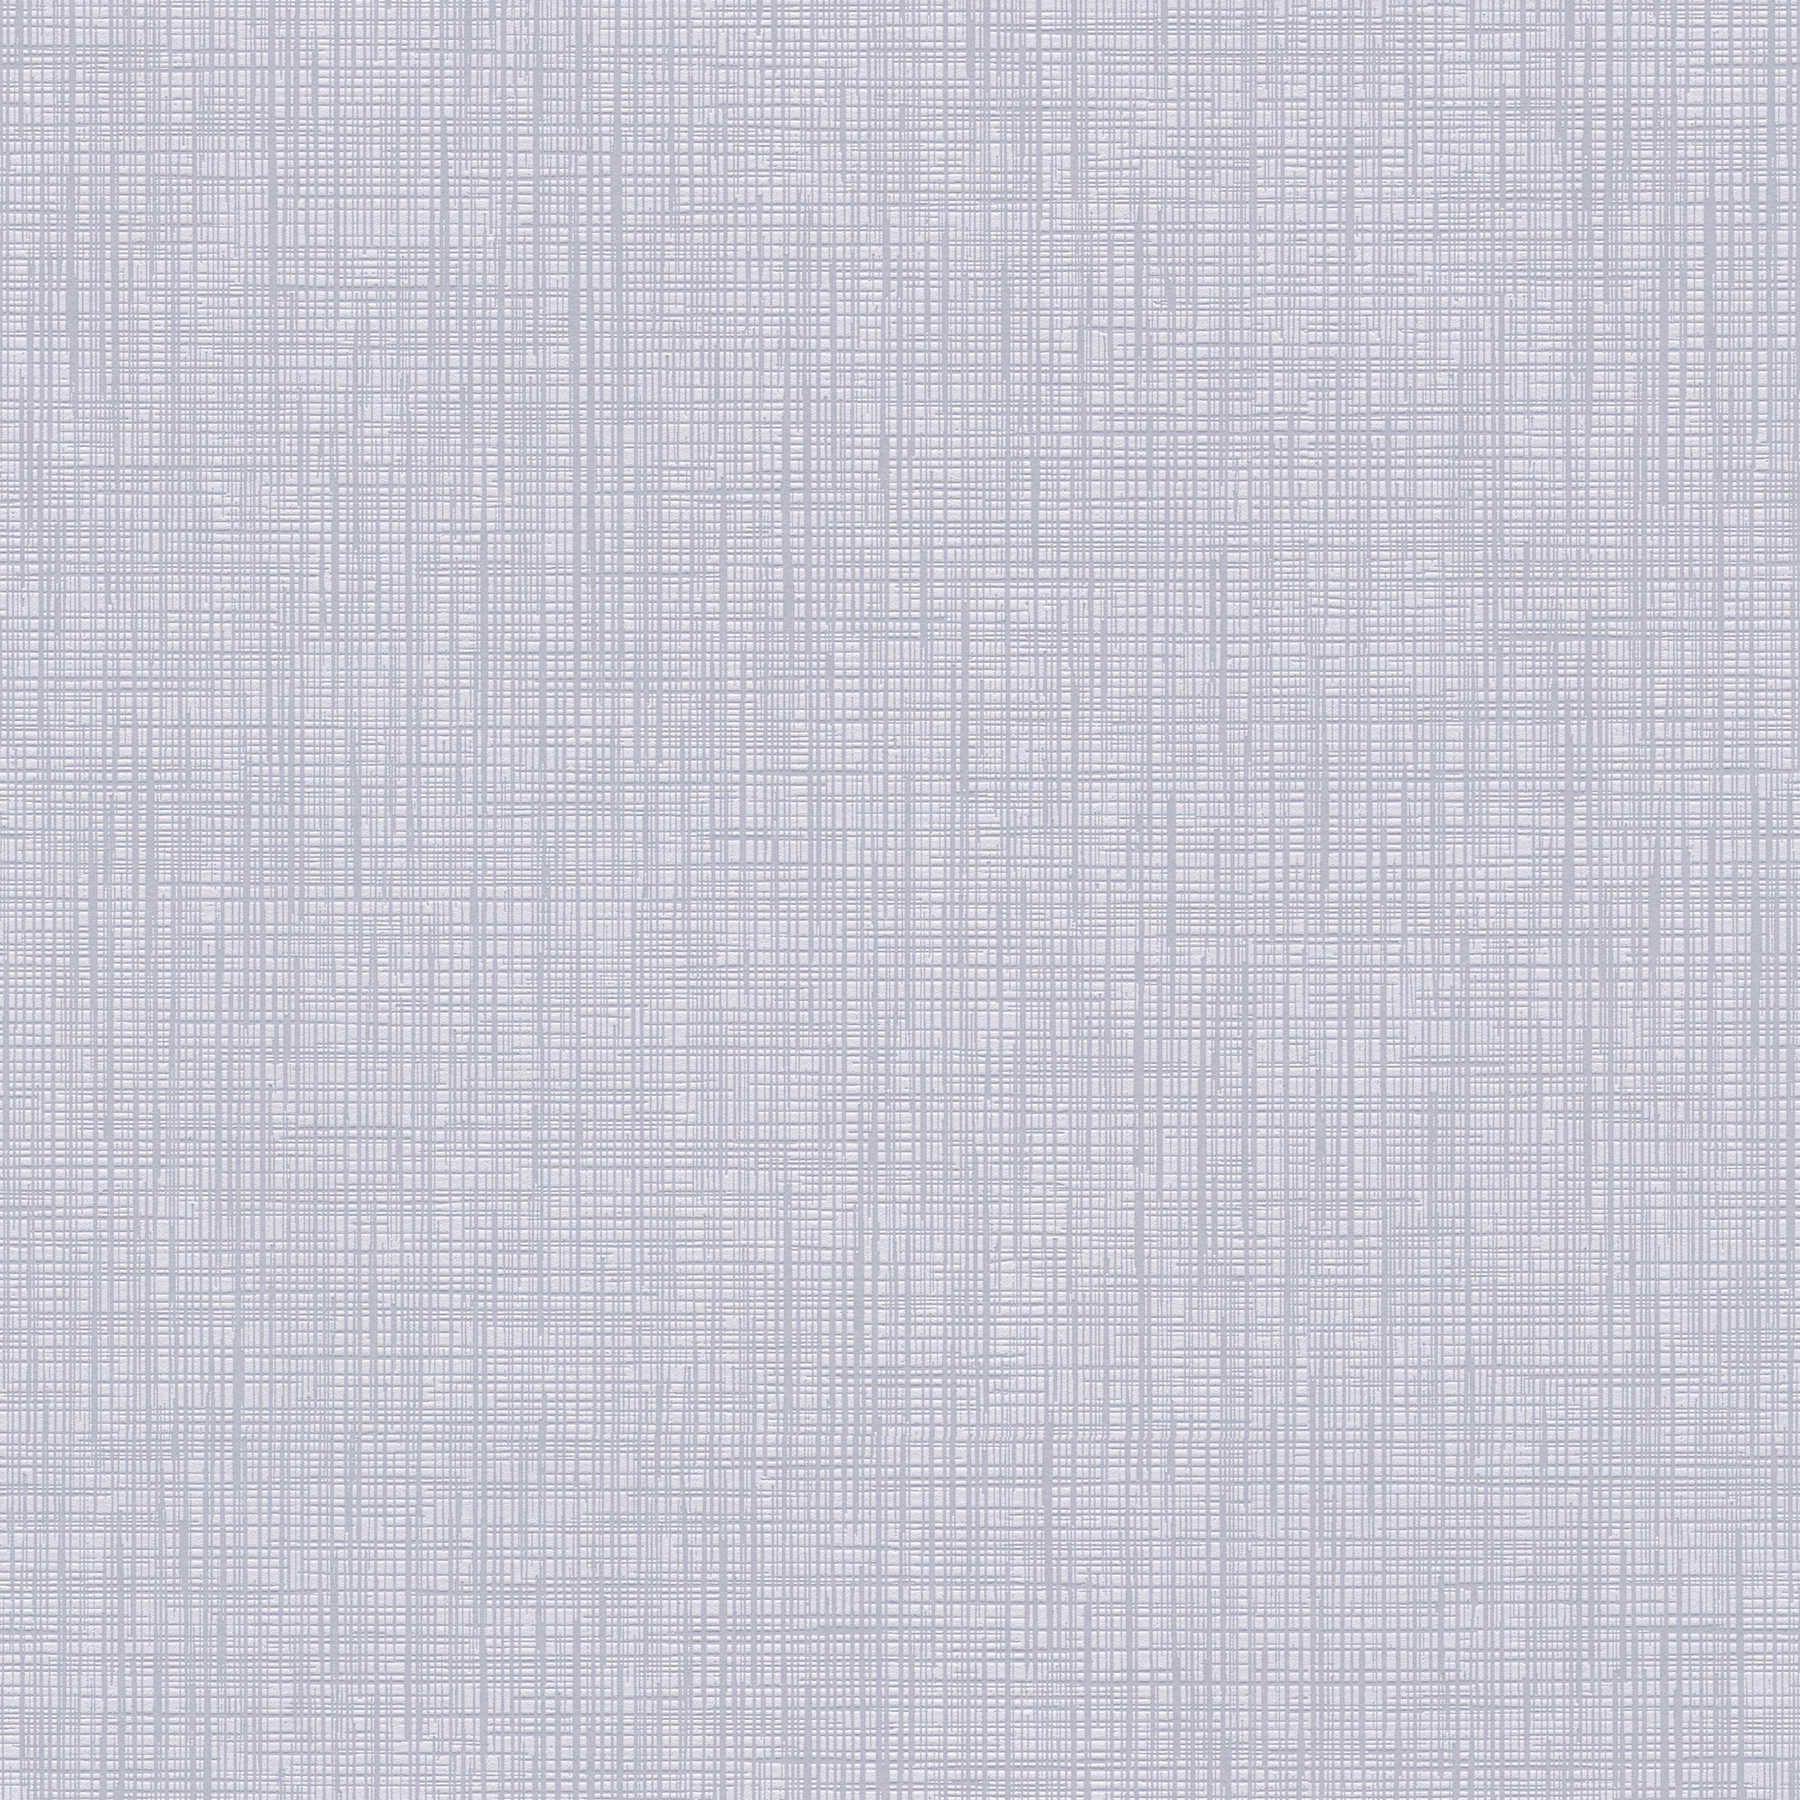 Plain wallpaper retro pattern mottled textile texture - grey
